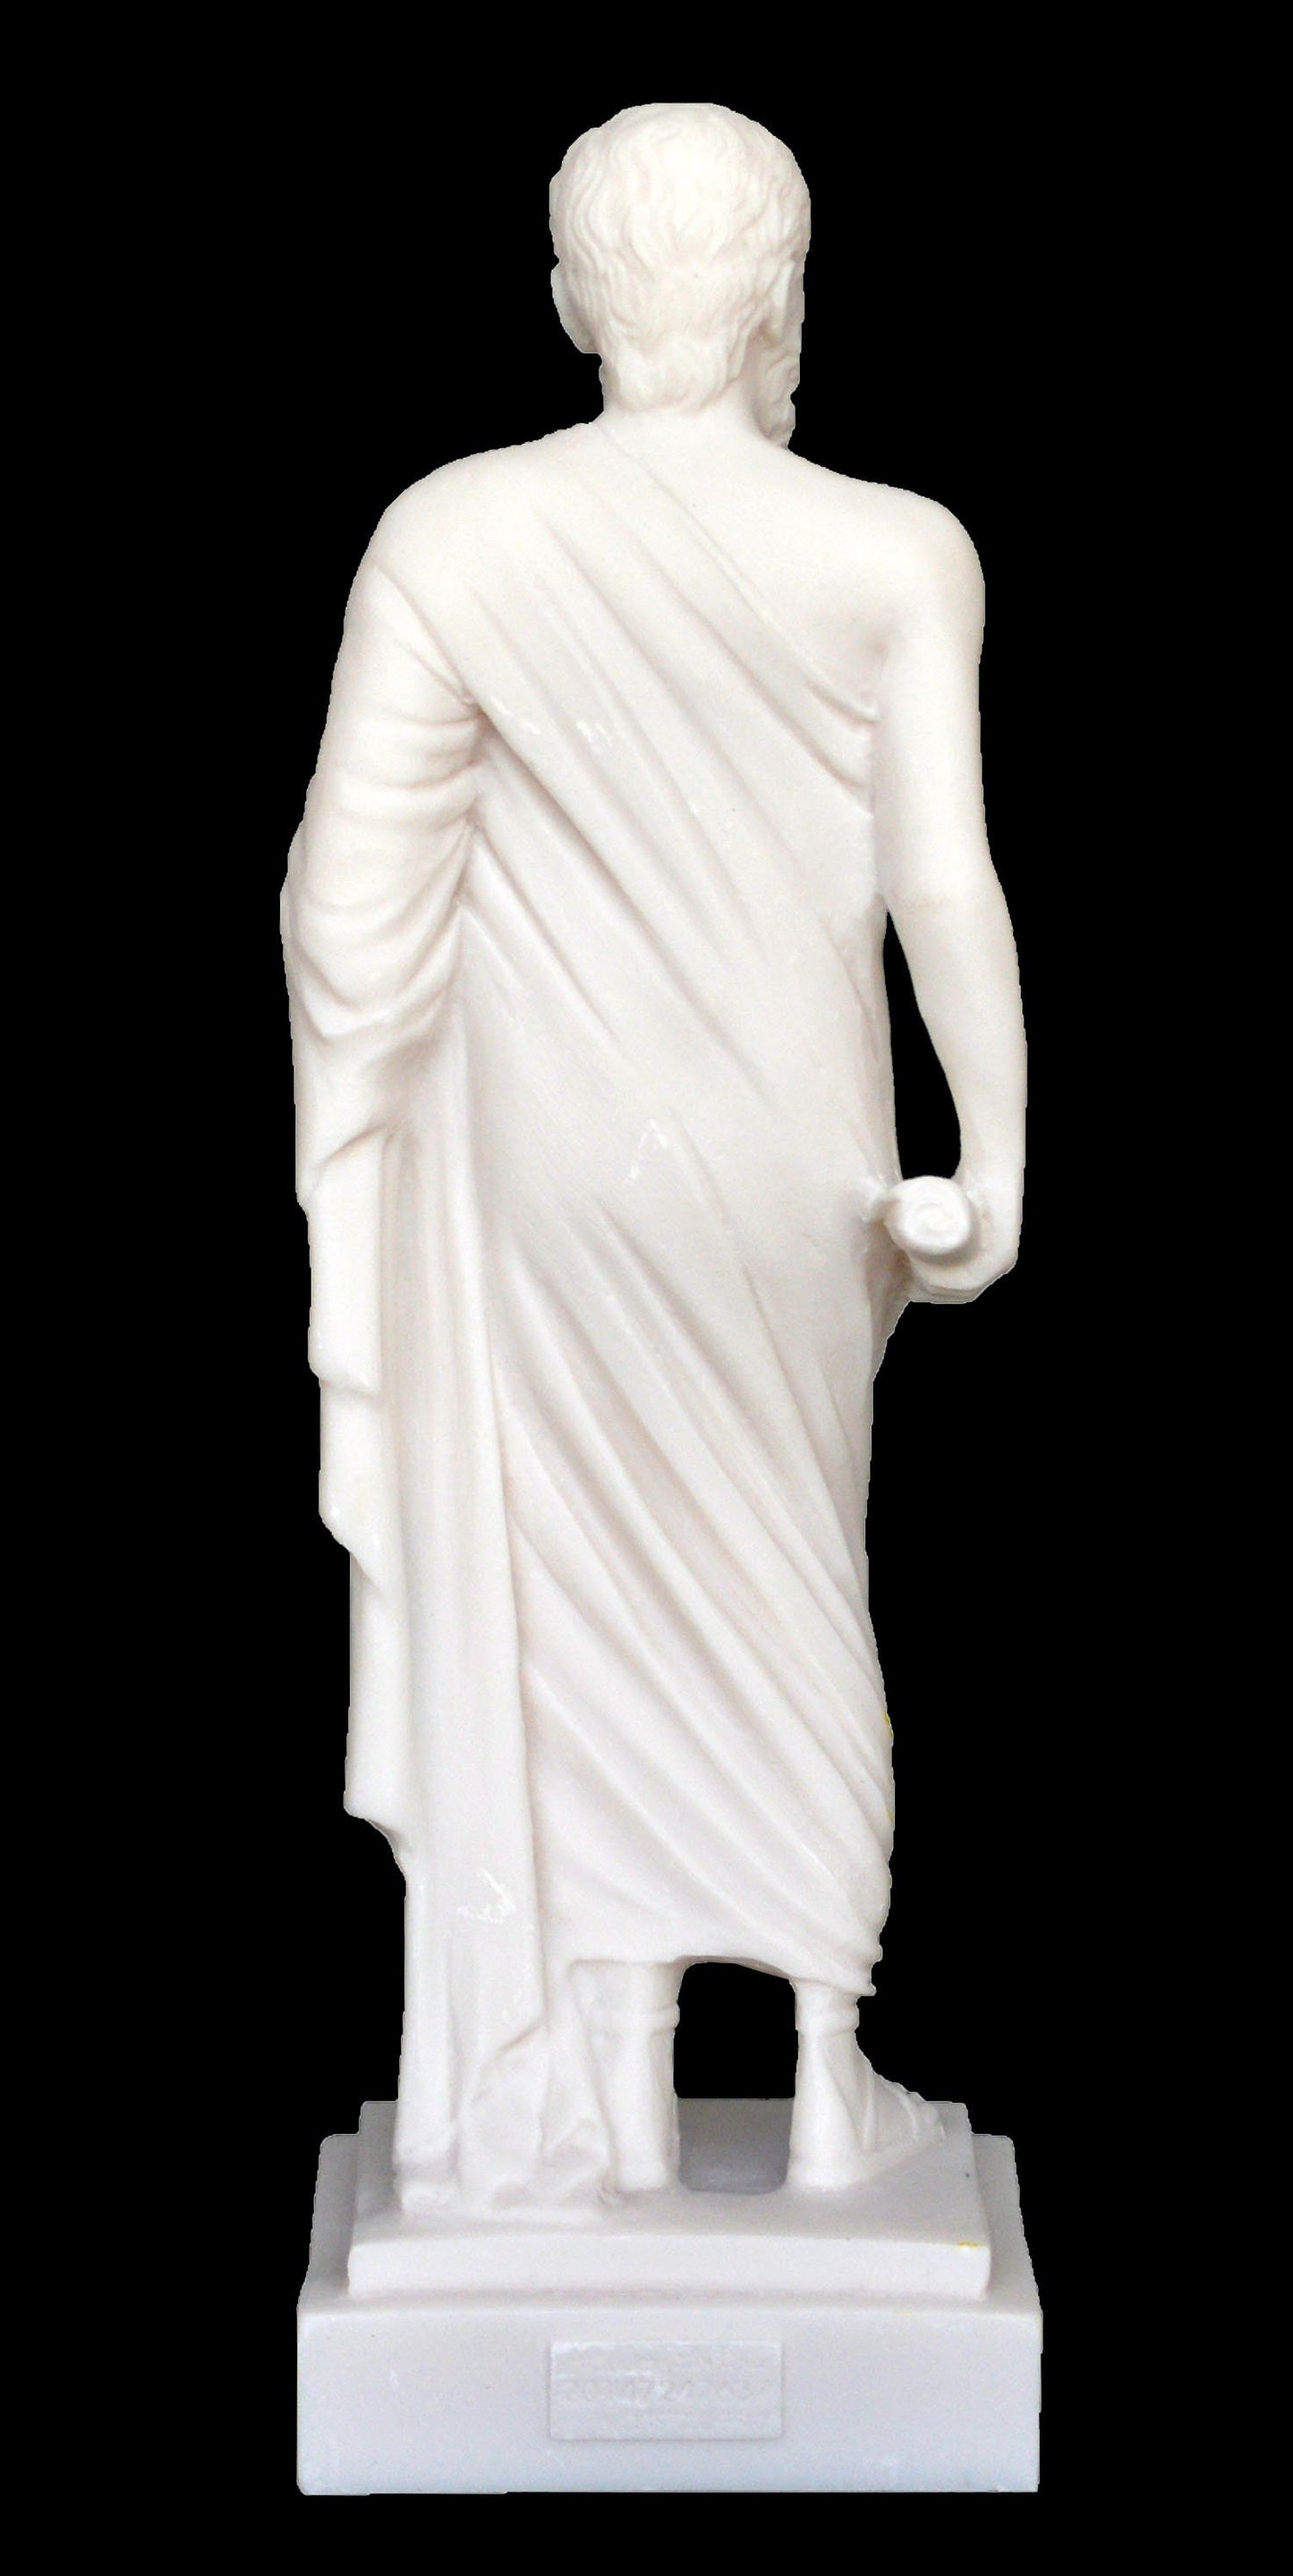 Socrates - Ancient Greek Philosopher - 470-399 BC - Teacher of Plato - Father of Western Philosophy - Alabaster Statue Sculpture